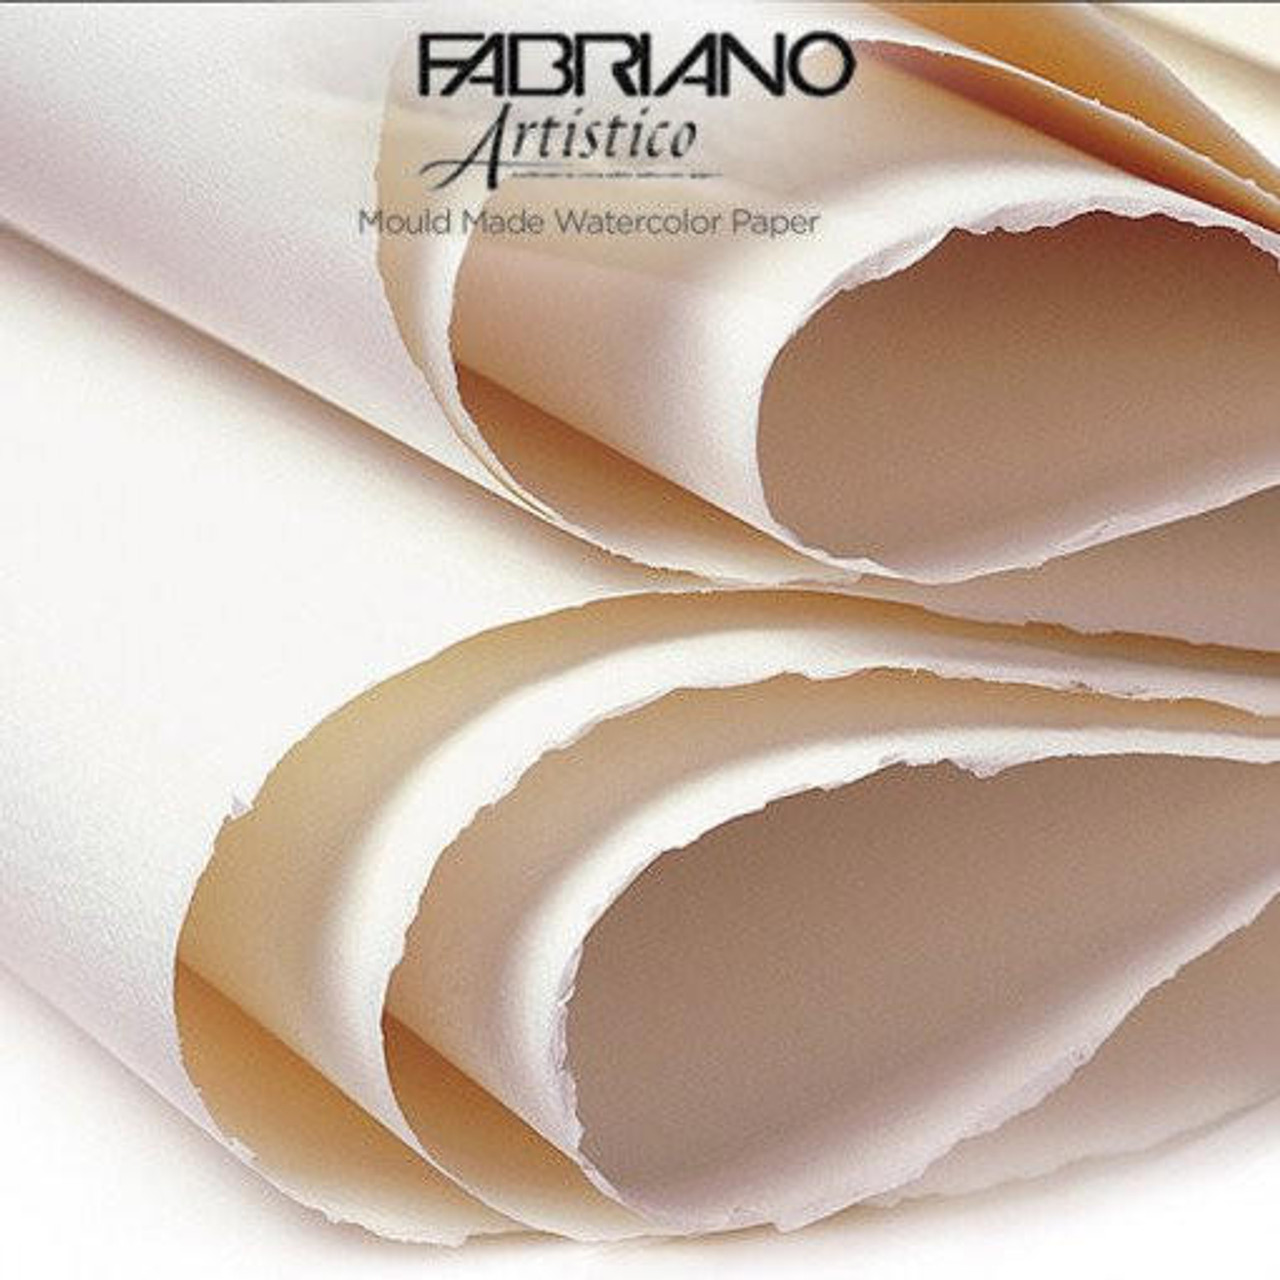 Fabriano Artistico Extra White Watercolor Paper - 140 lb. Rough 22 x 30 1 Sheet